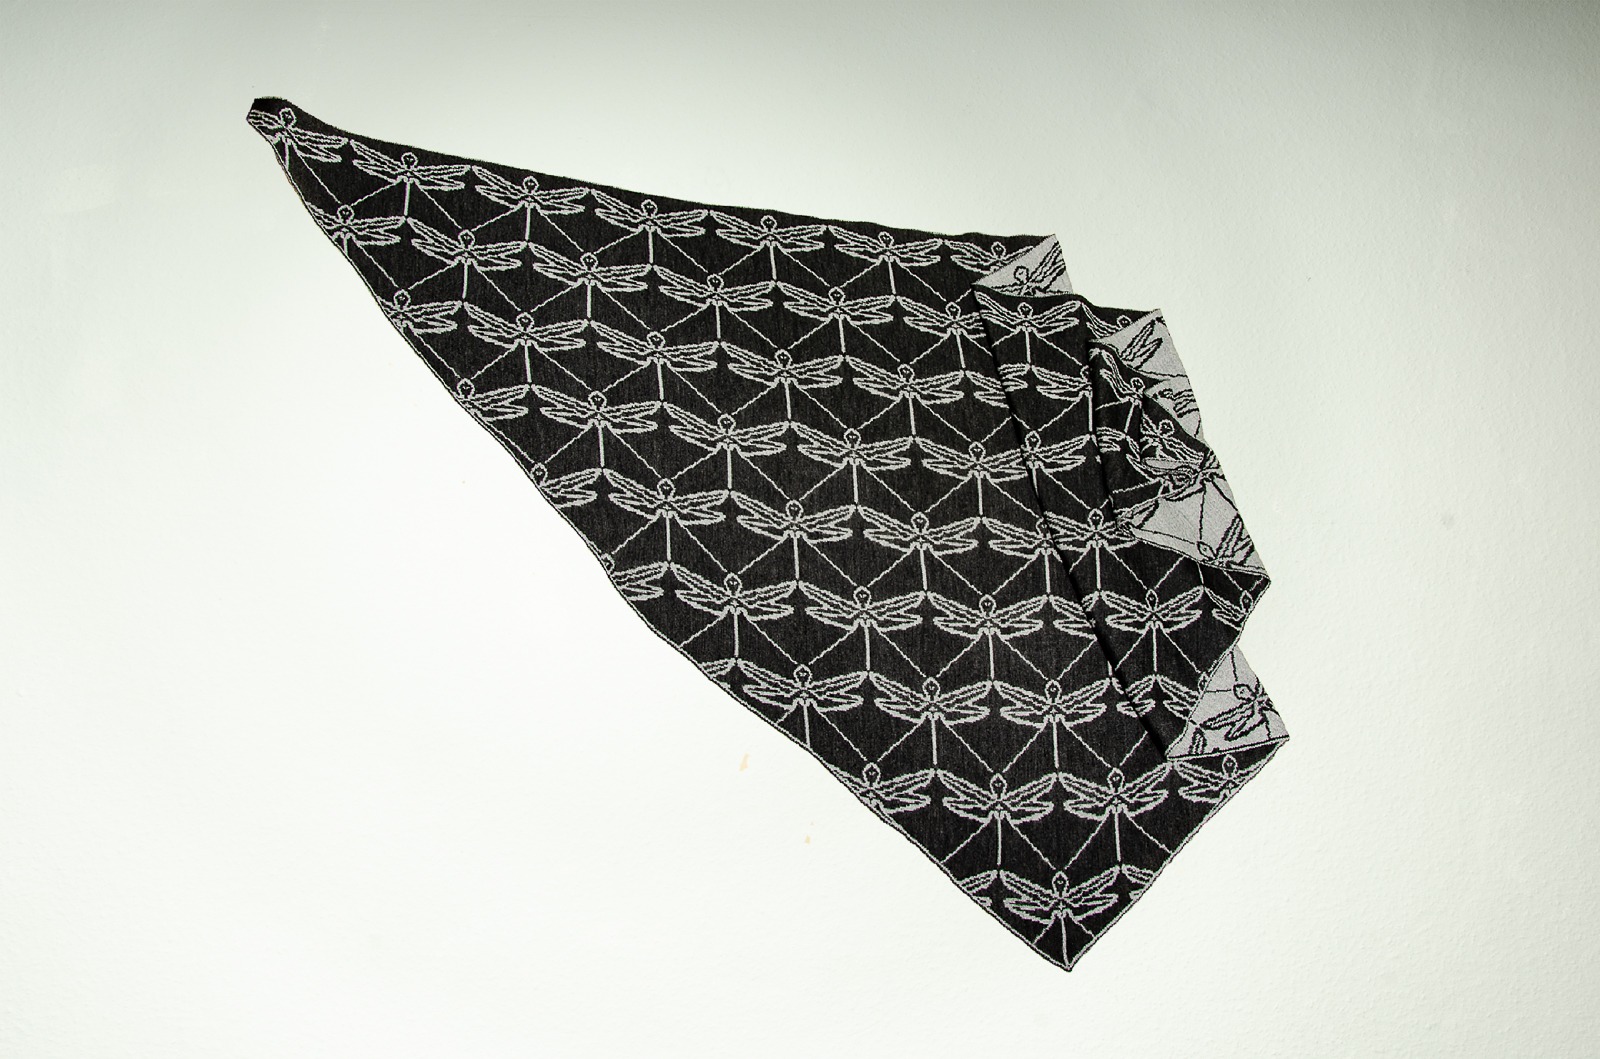 Stole, triangular shawl in light gray and dark gray 2